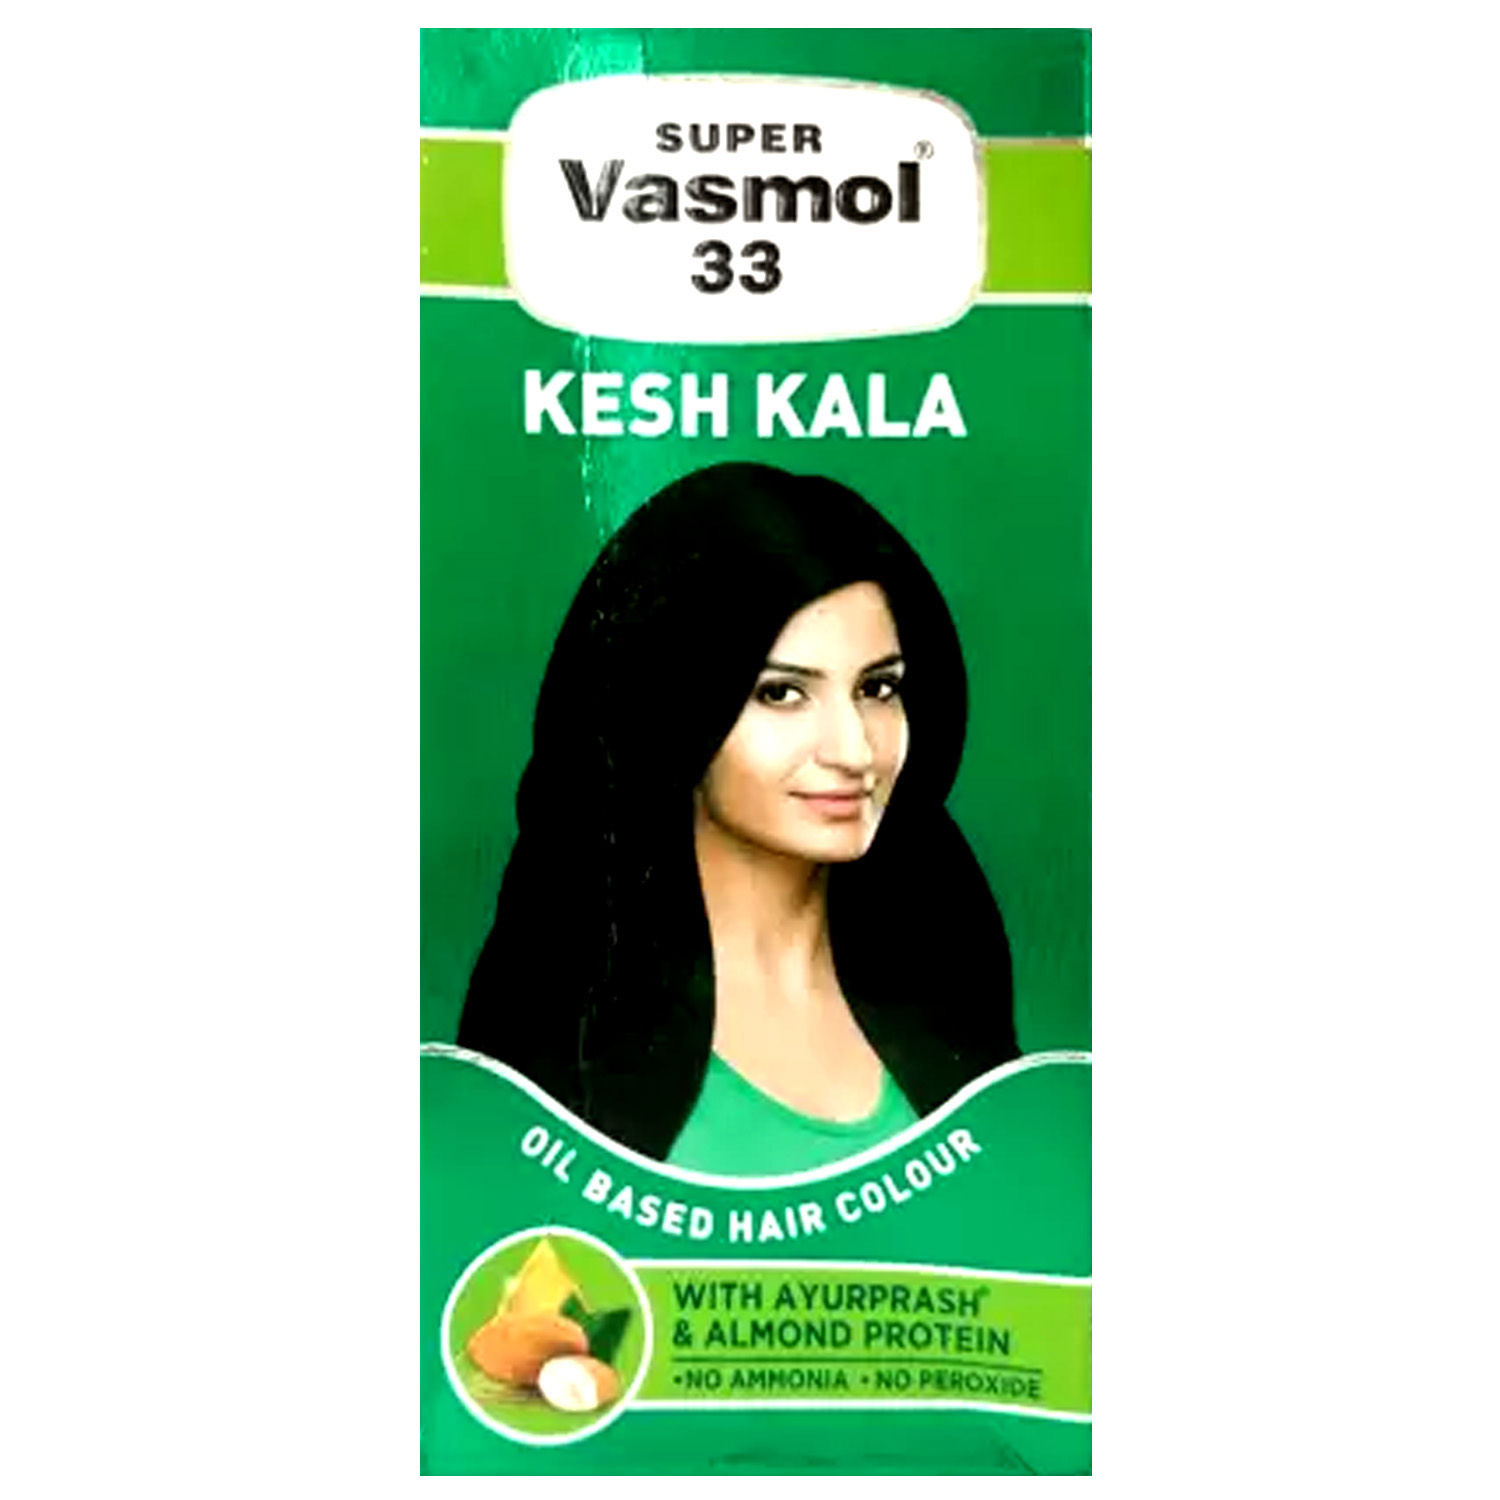 Super Vasmol 33 Kesh Kala Oil Based Hair Colour 100ml Natural Blackpack  of 2  Priyadarshini